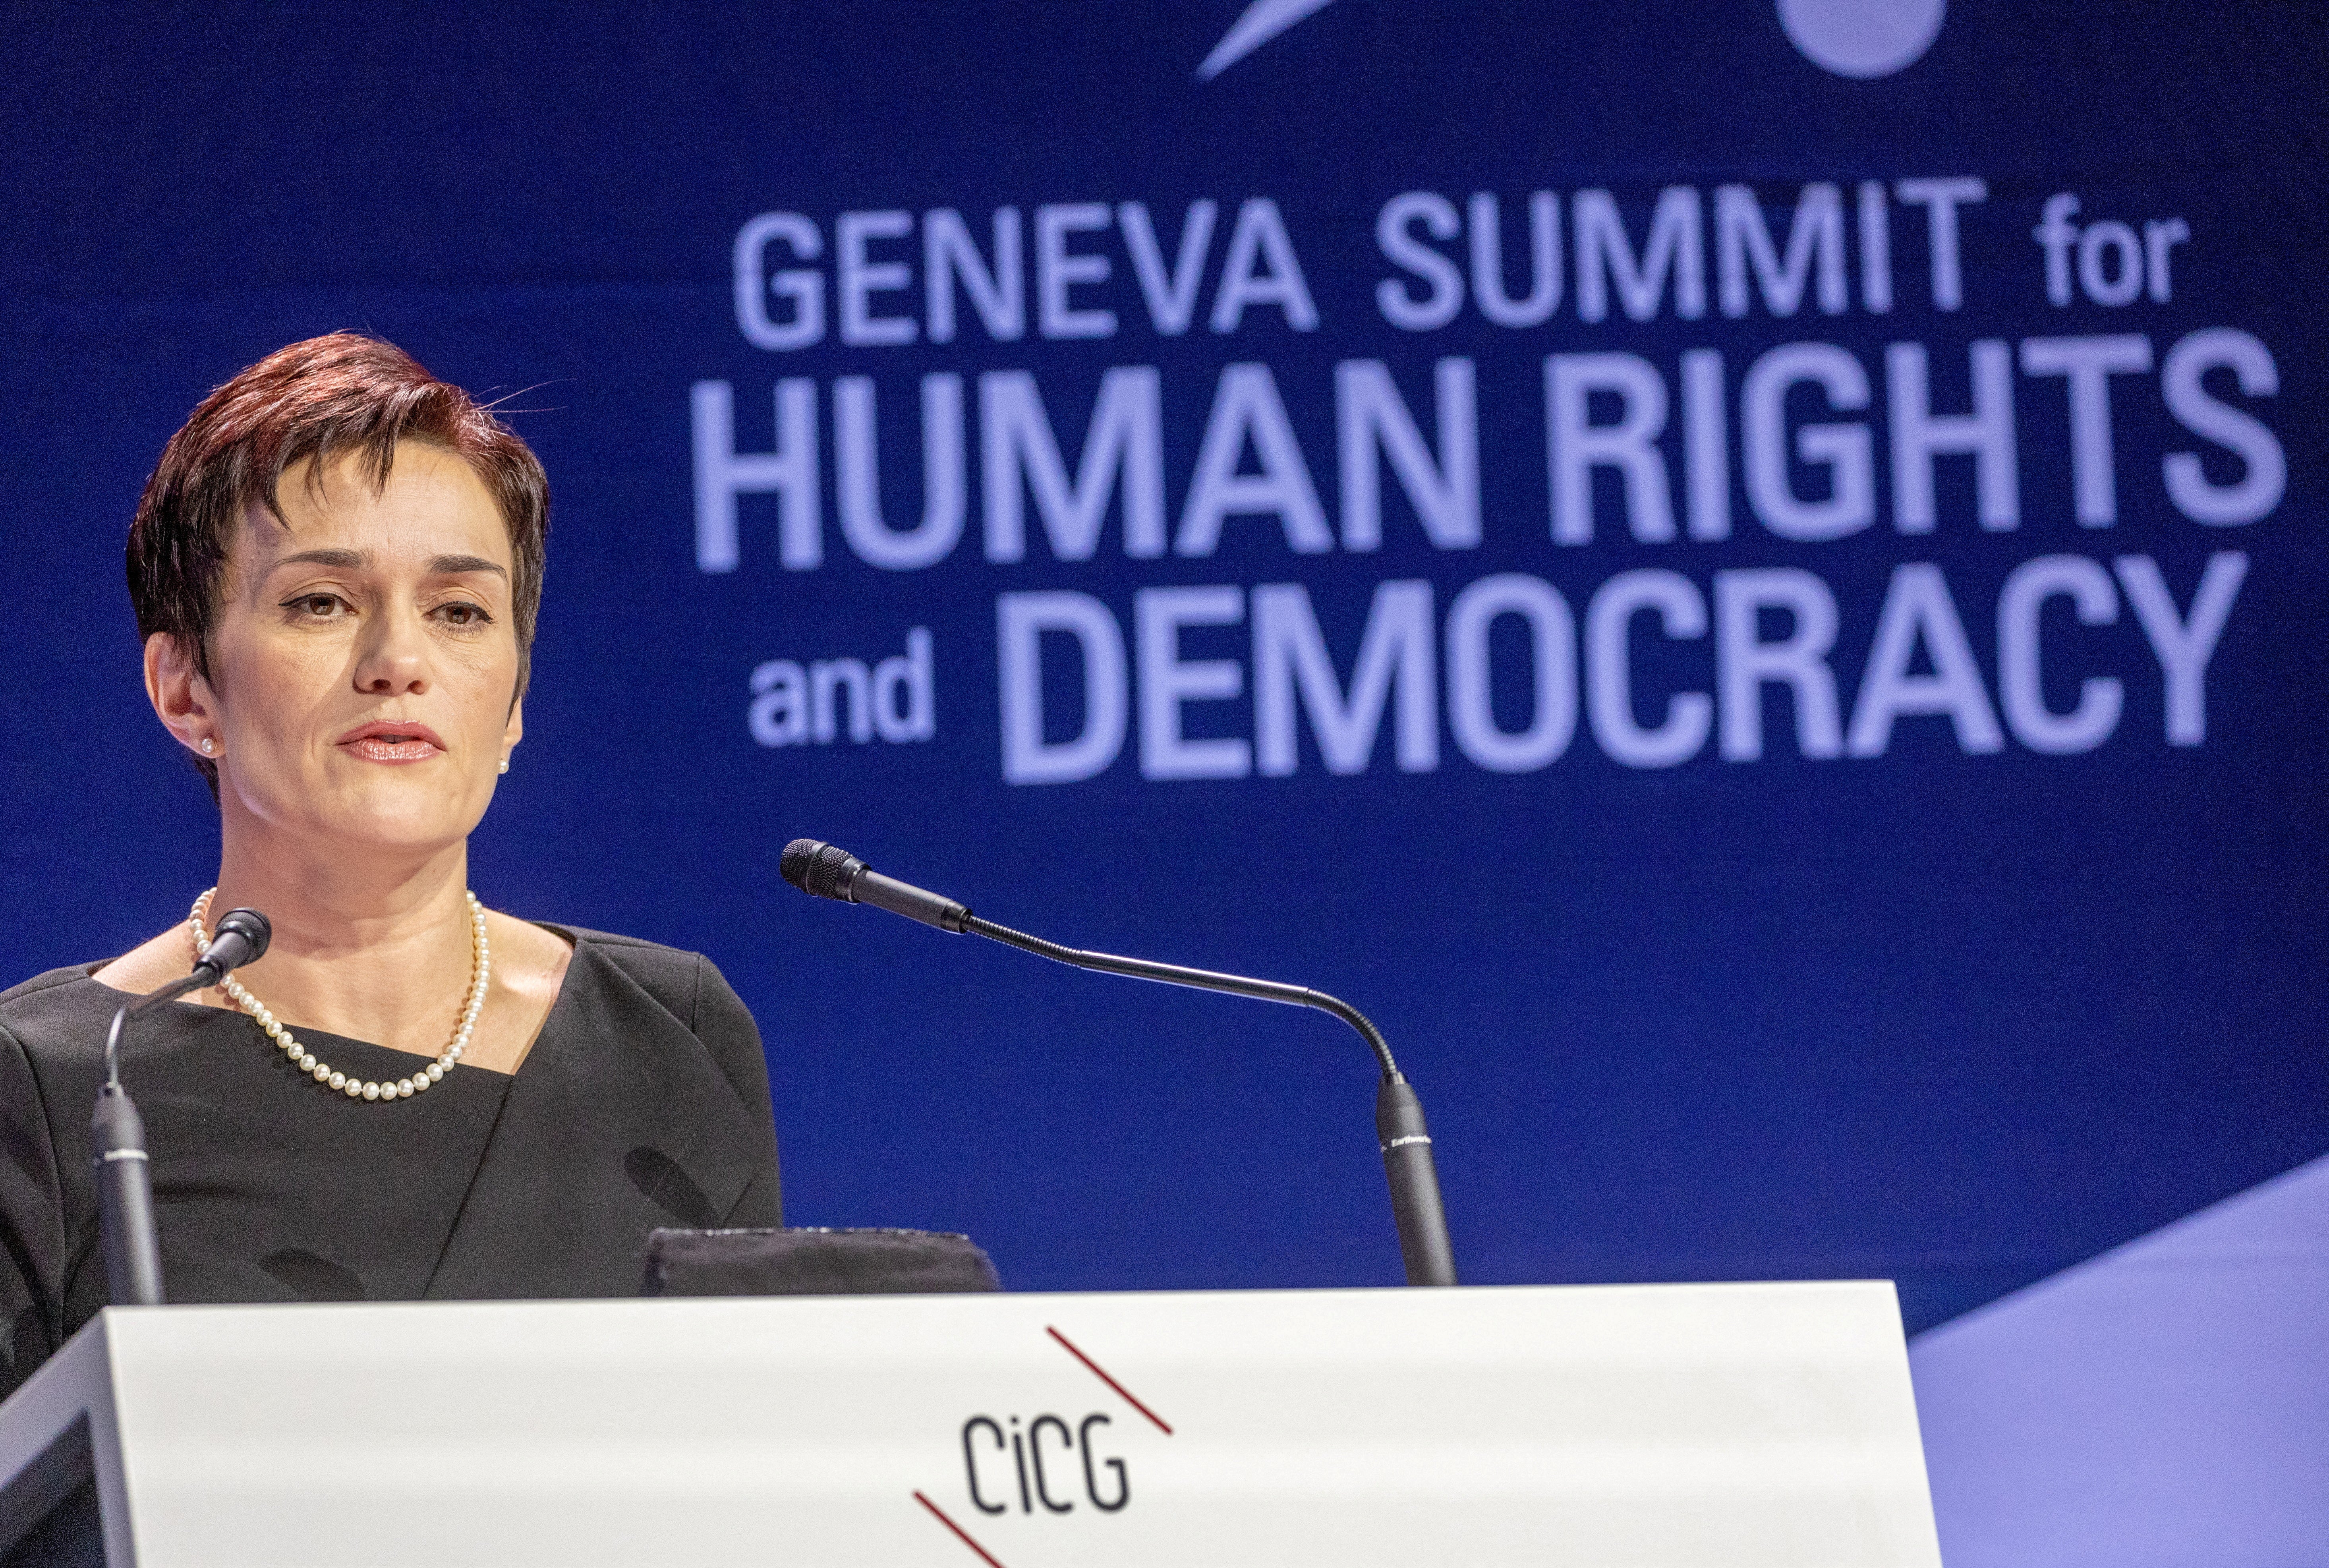 Evgenia Kara-Murza, wife of jailed Russian opposition figure Vladimir Kara-Murza, addresses the Geneva Summit for Human Rights and Democracy in May